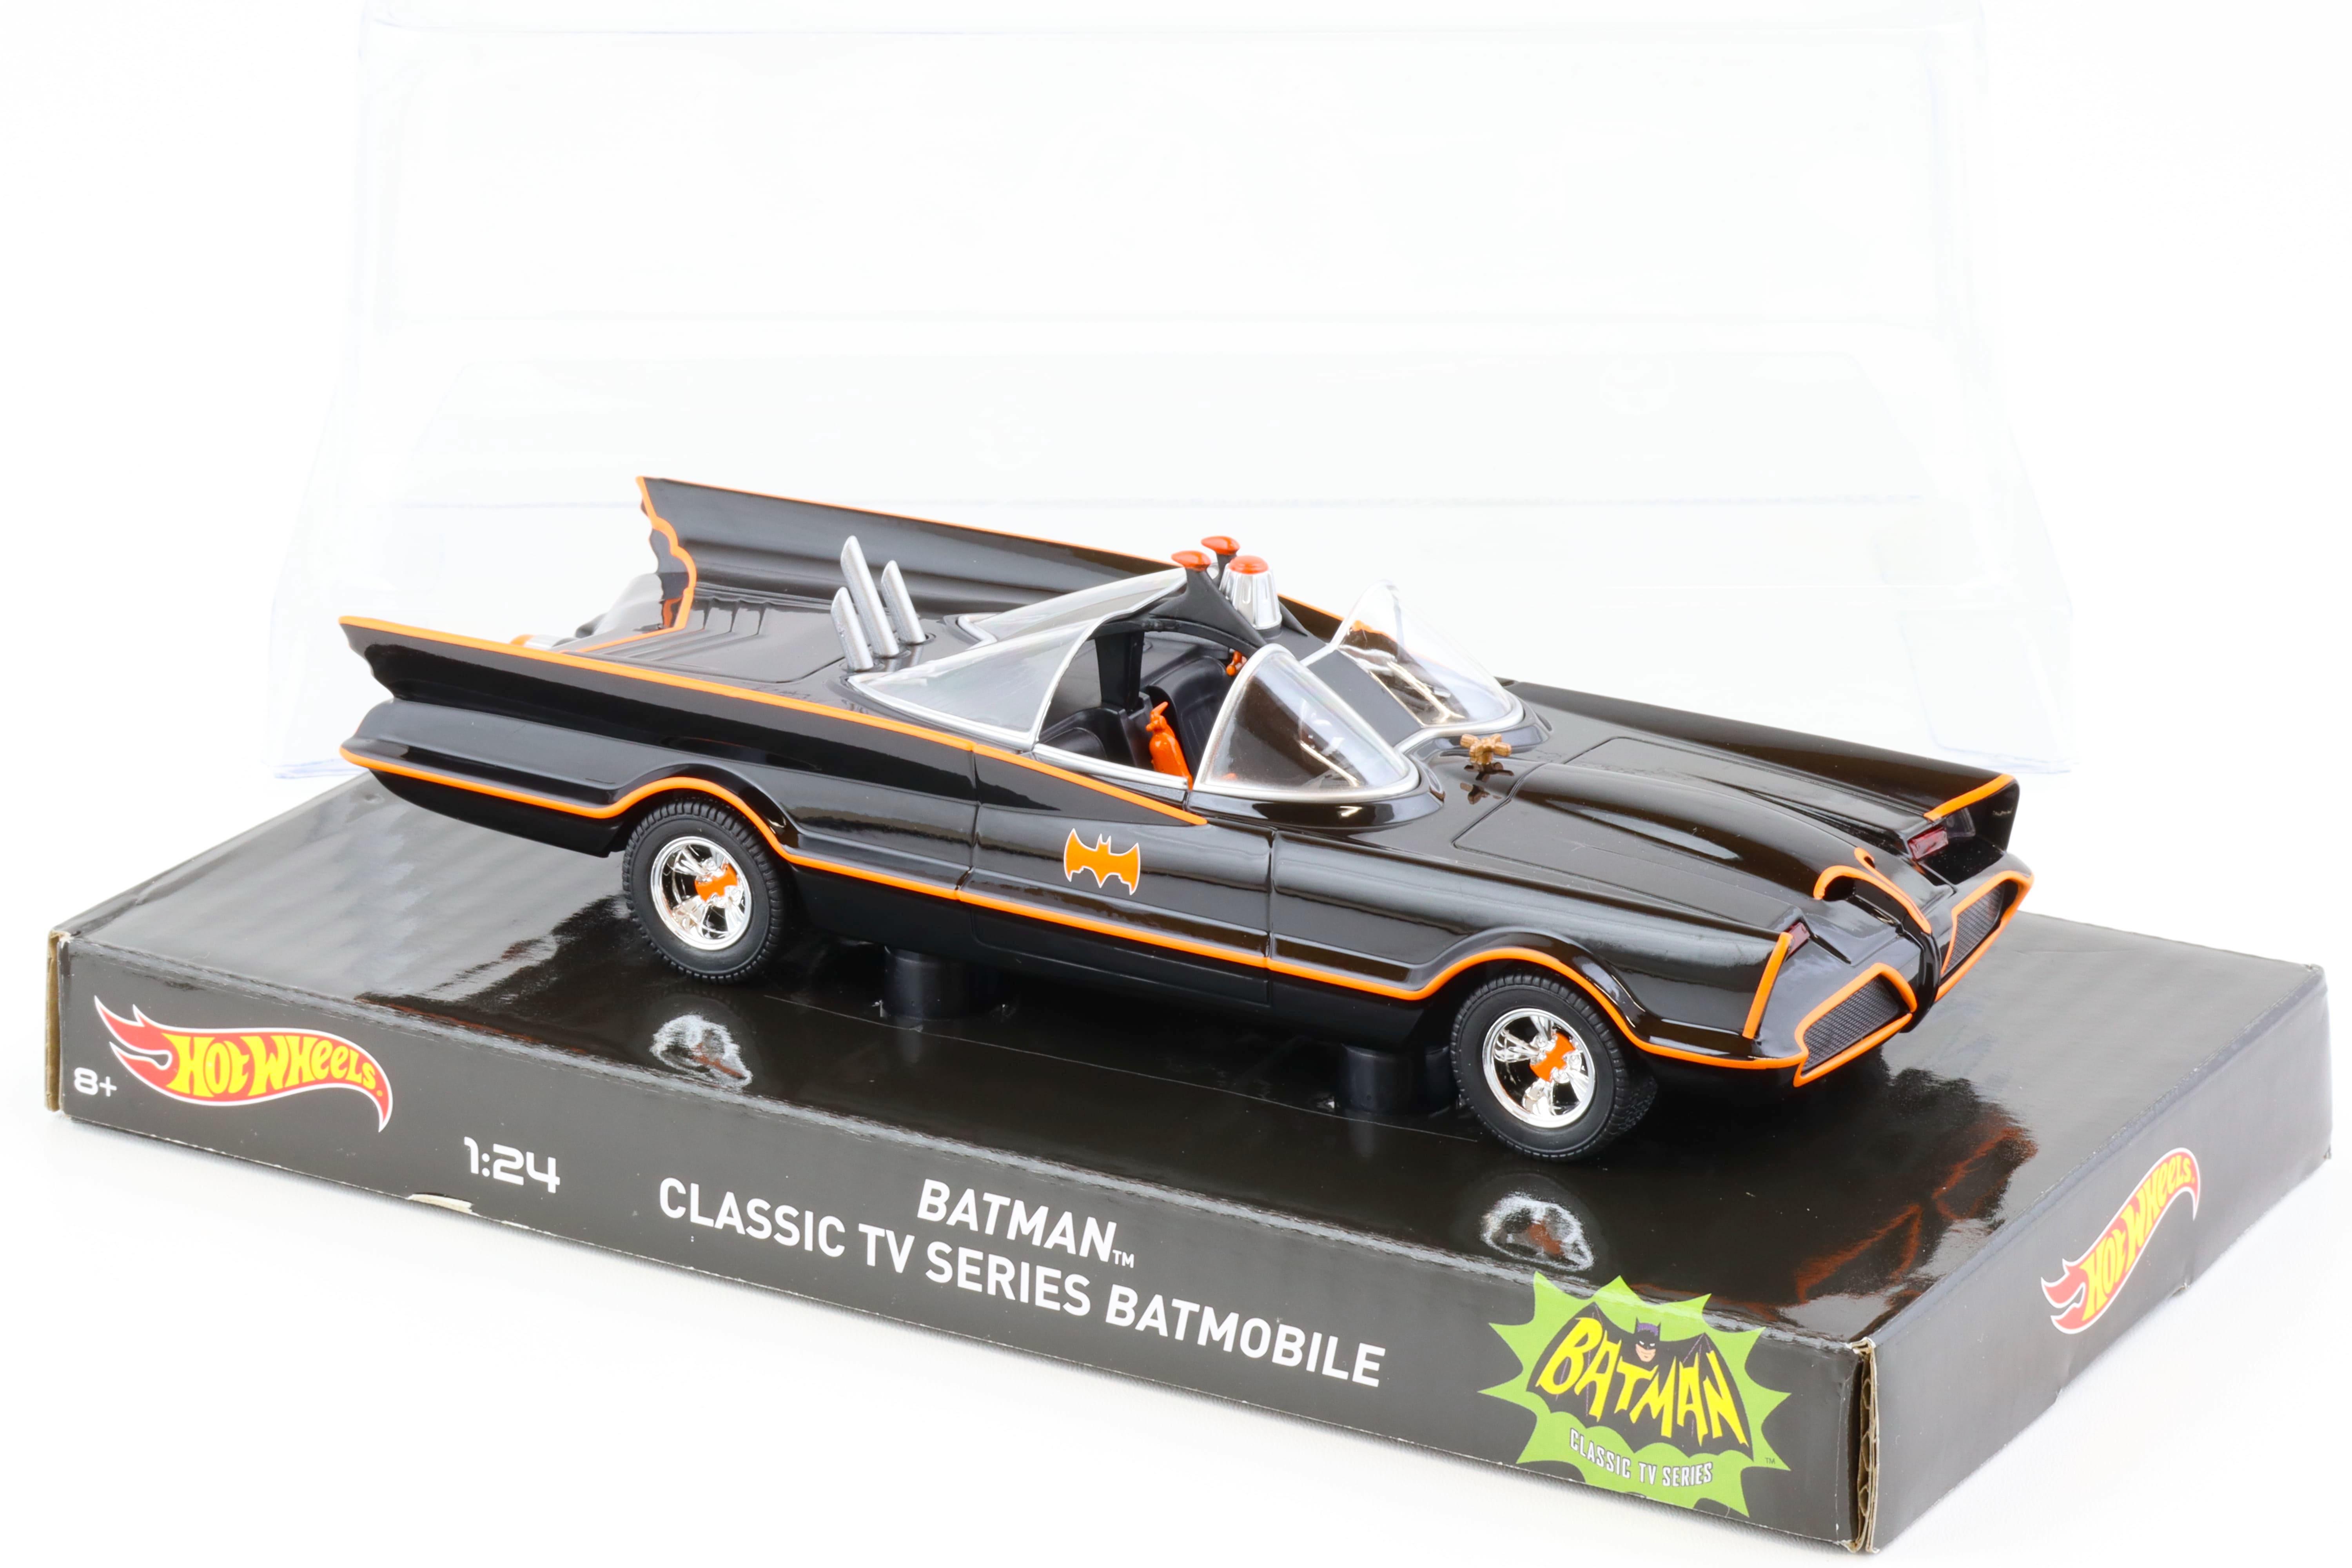 1:24 Hot Wheels BATMAN Classic TV Series Batmobile black/ orange